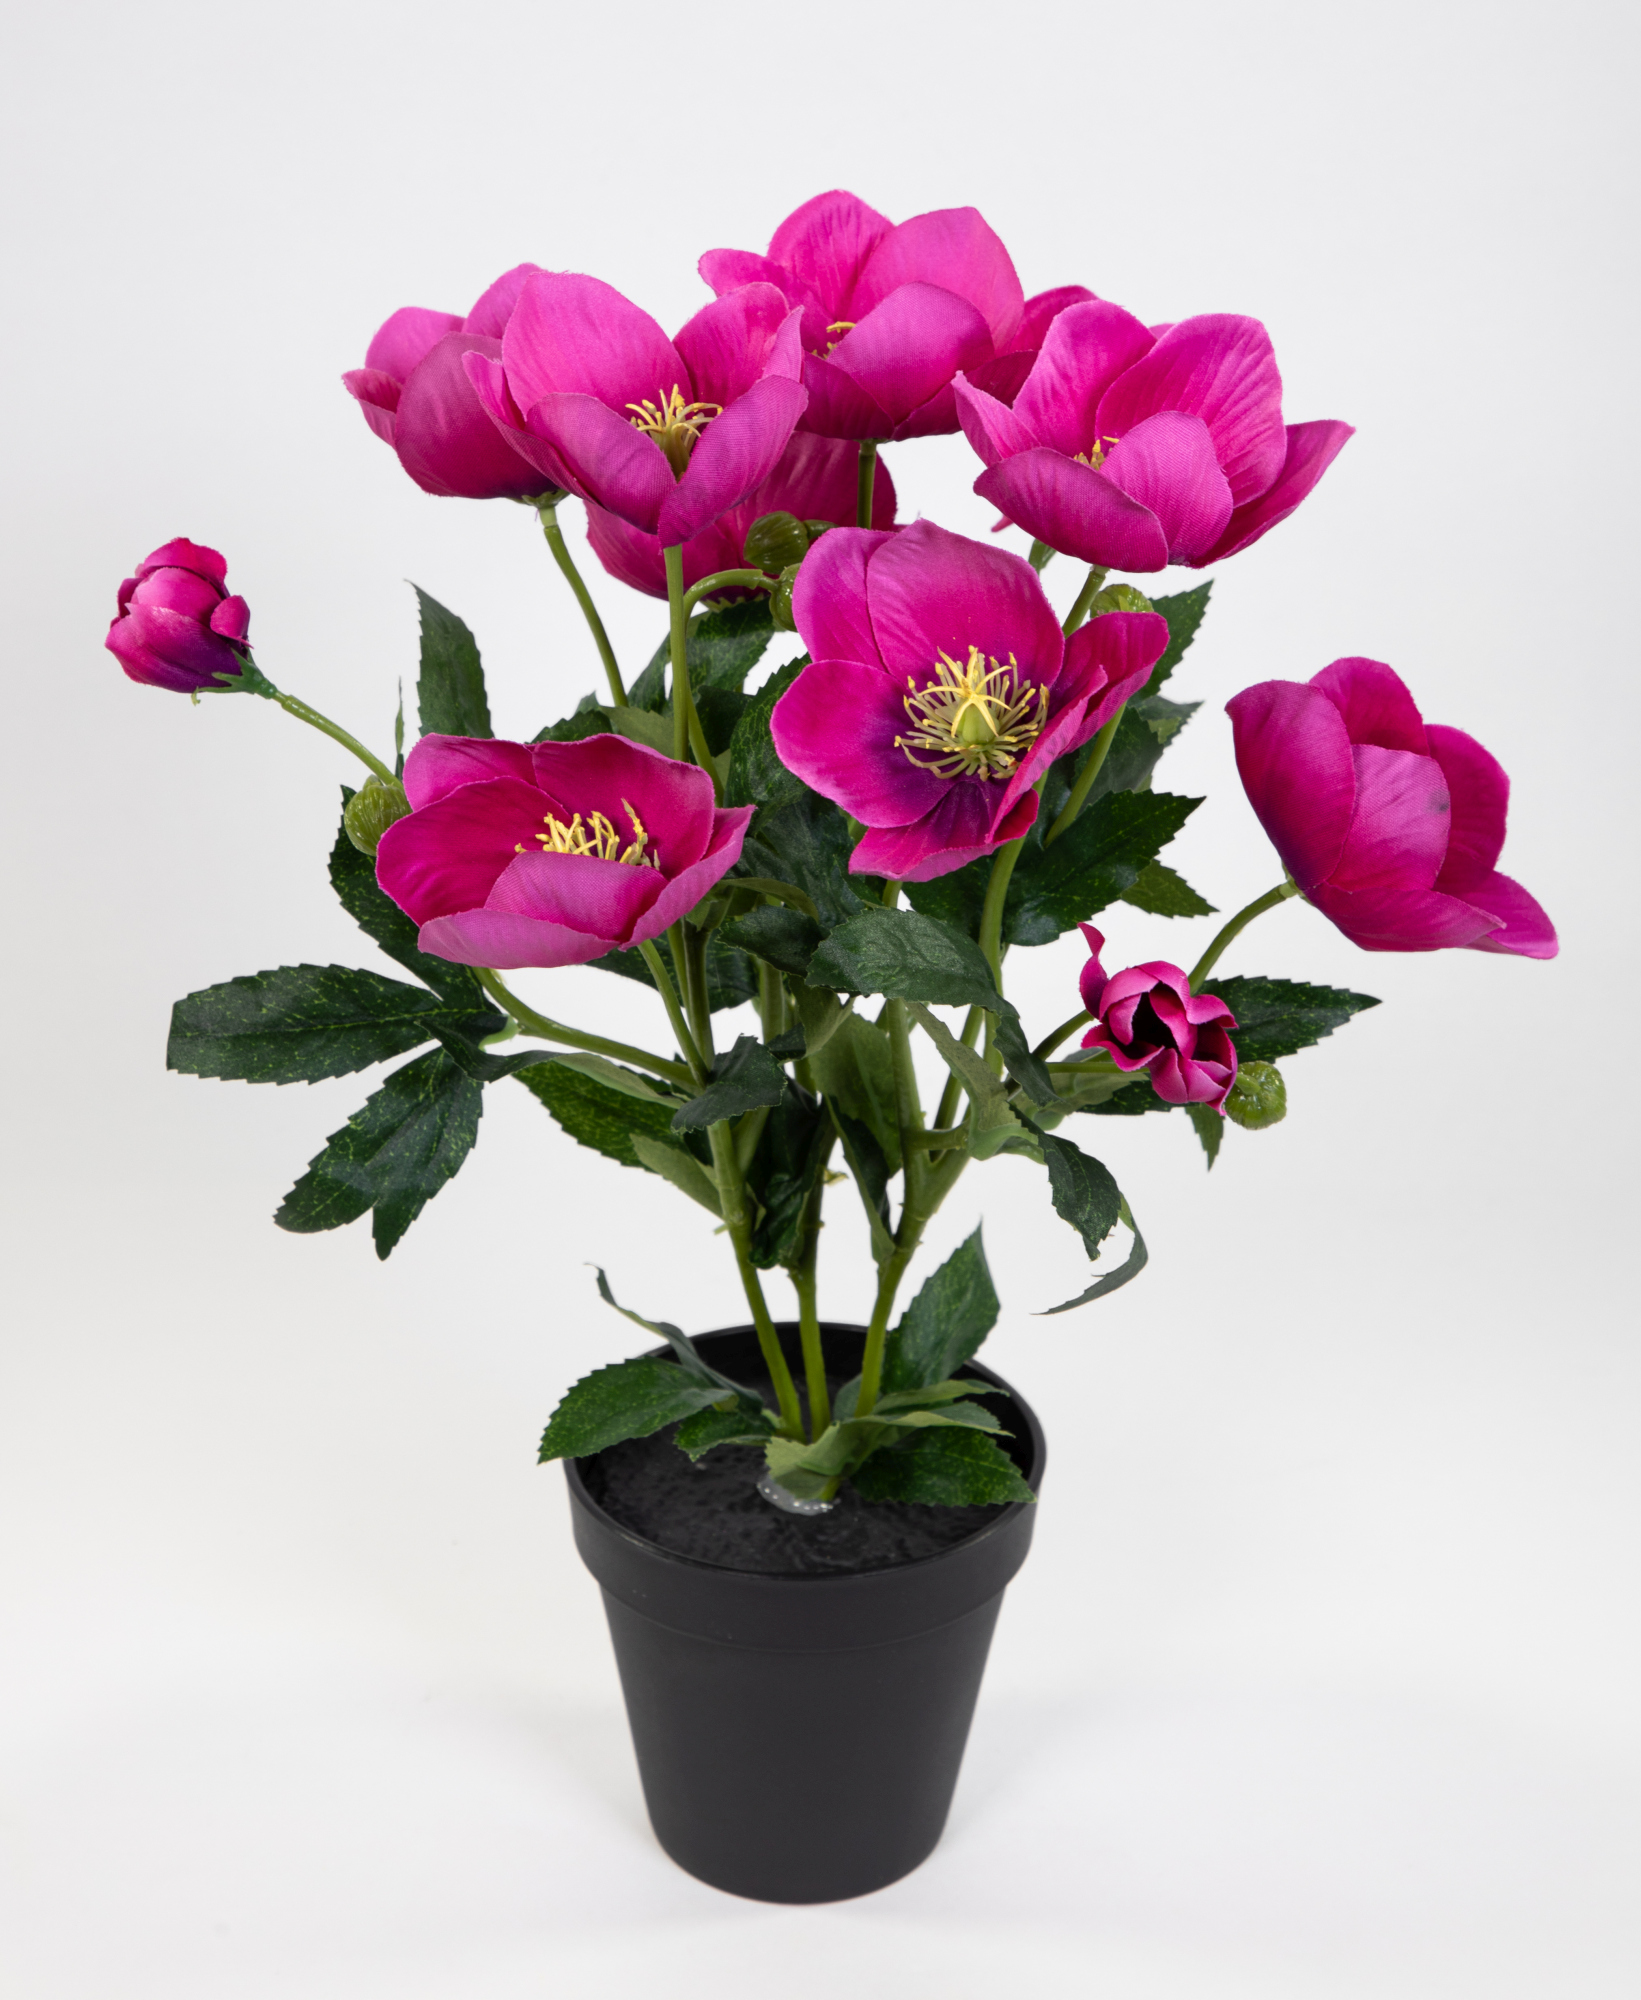 Christrosenbusch 36cm rosa-pink im Topf PM Kunstblumen künstliche Christrose Blumen Kunstblumen